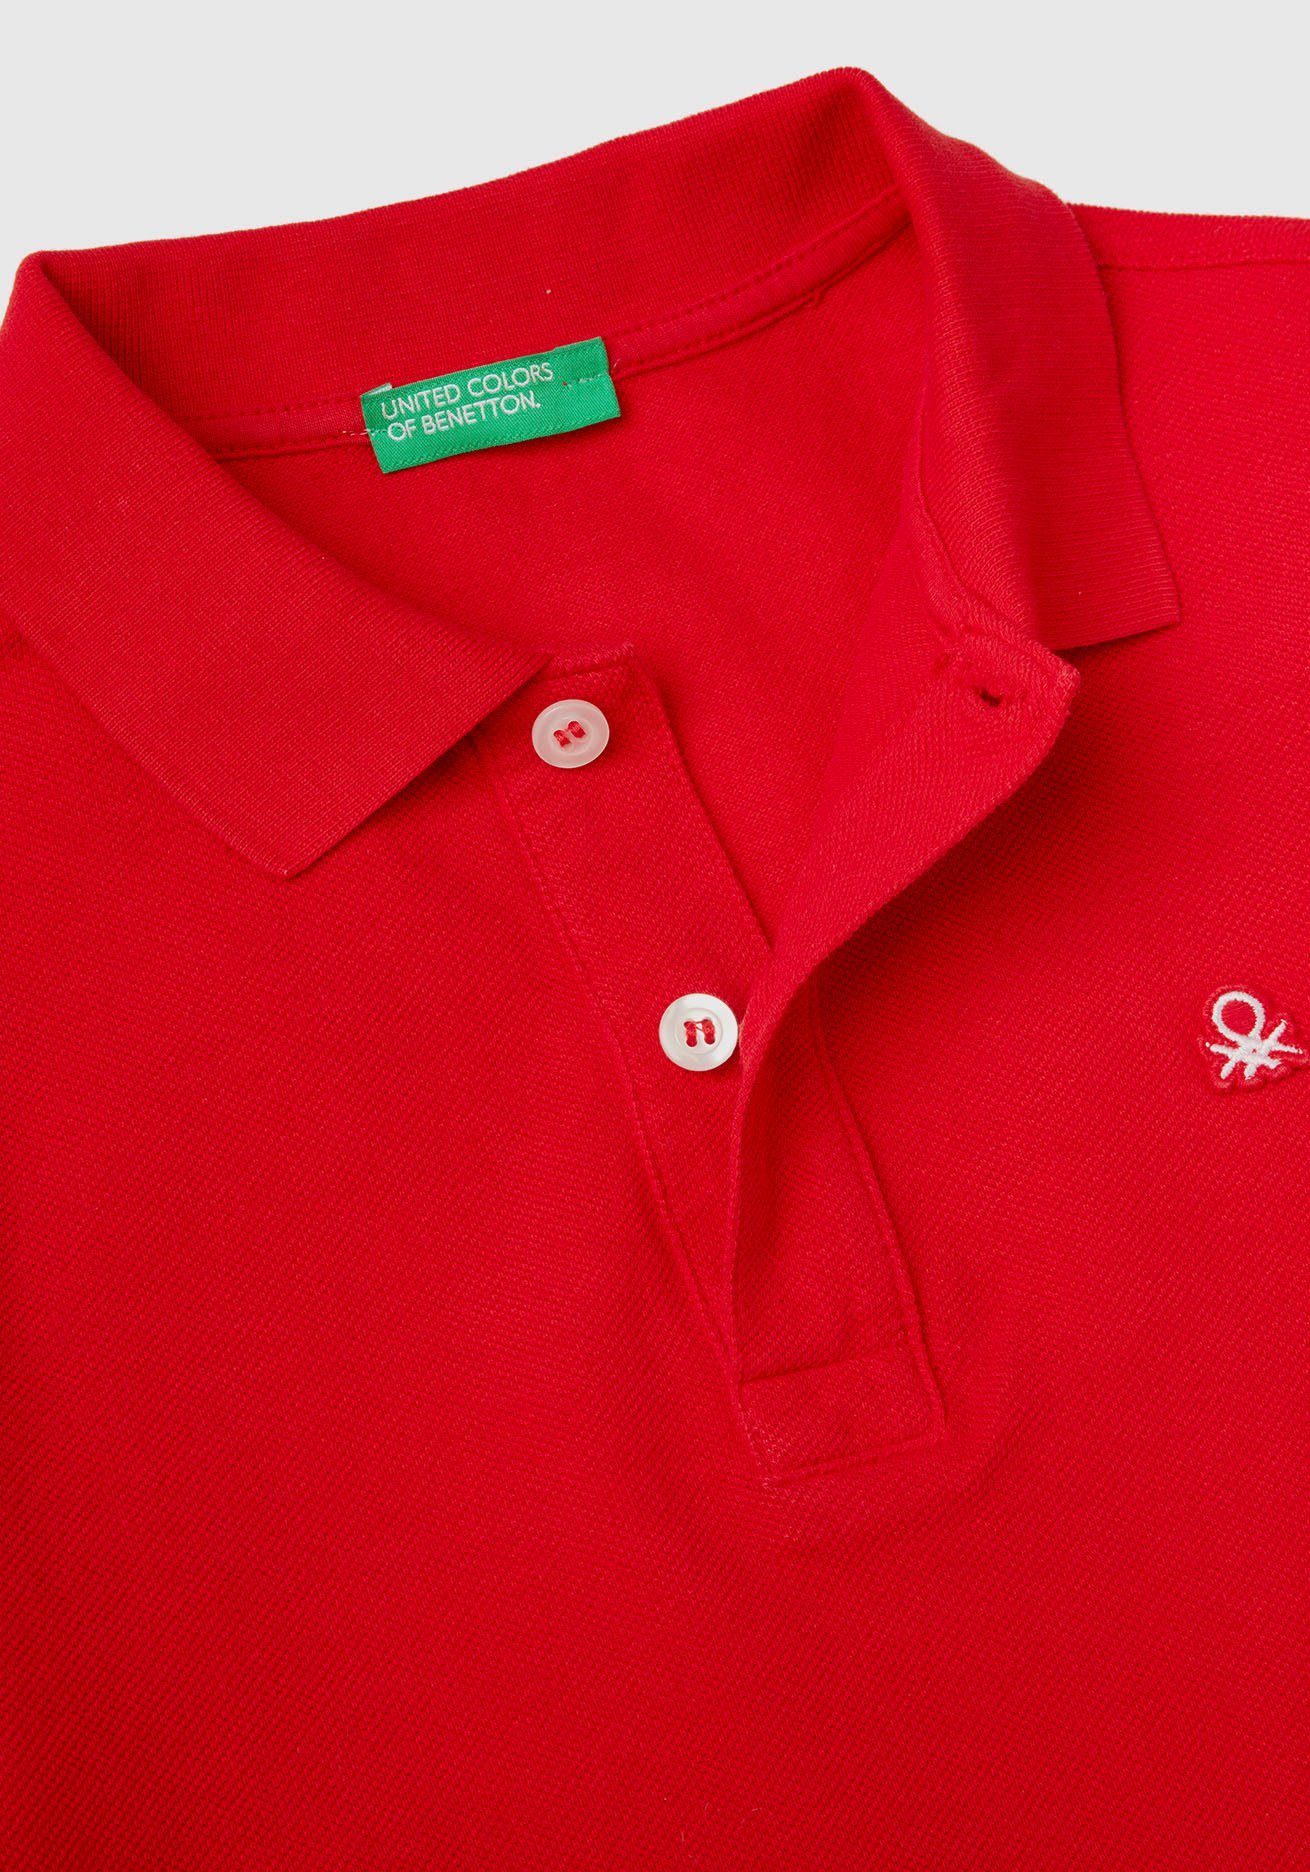 United Colors of Benetton Poloshirt mit Markenlabel